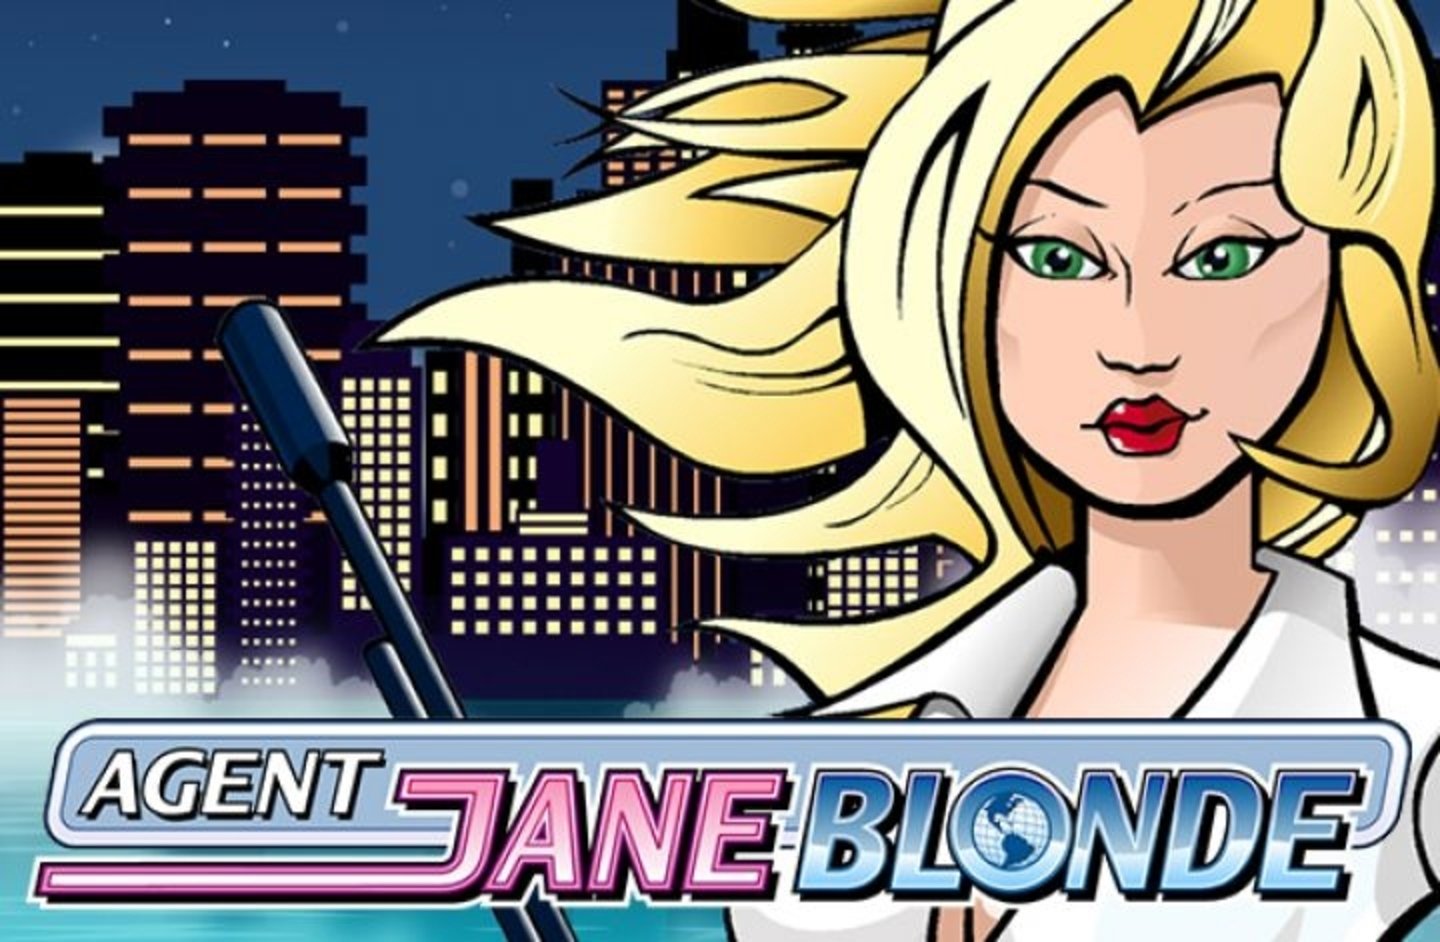 Universal agent jane blonde returns slot machine online microgaming money arcade